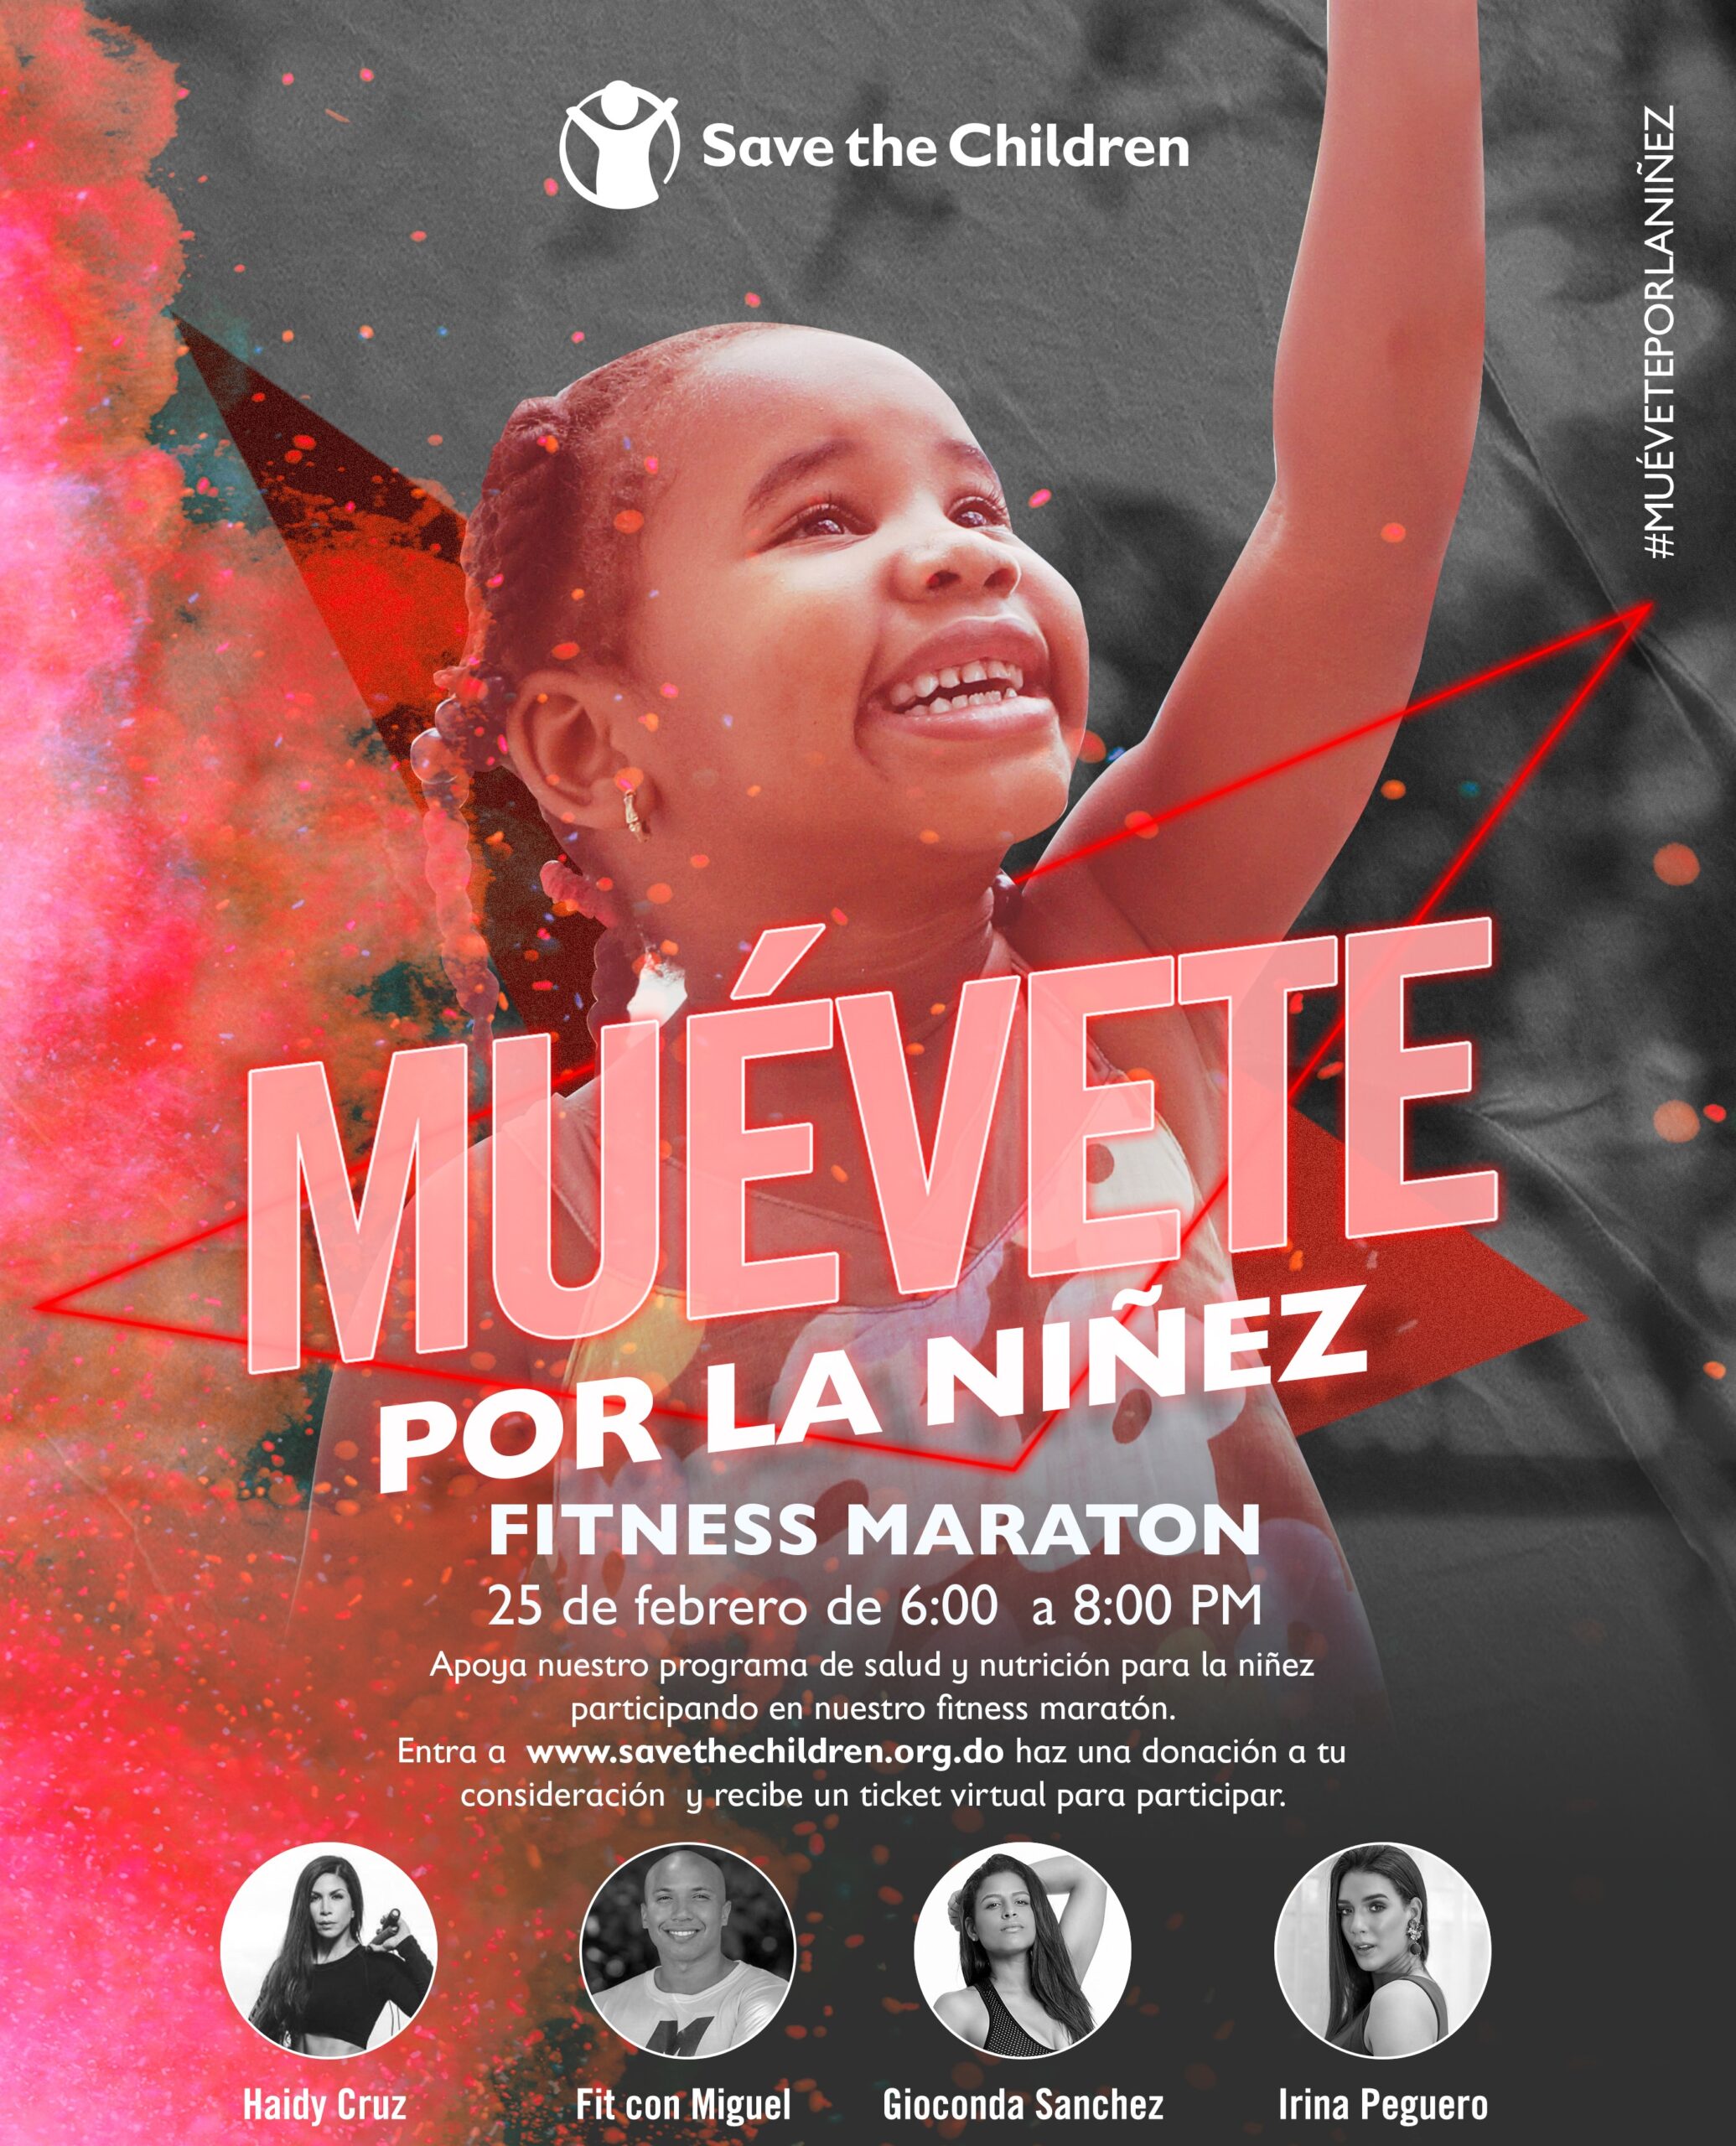 Save The Children realizará “Muévete por la niñez” Fitness Marathon